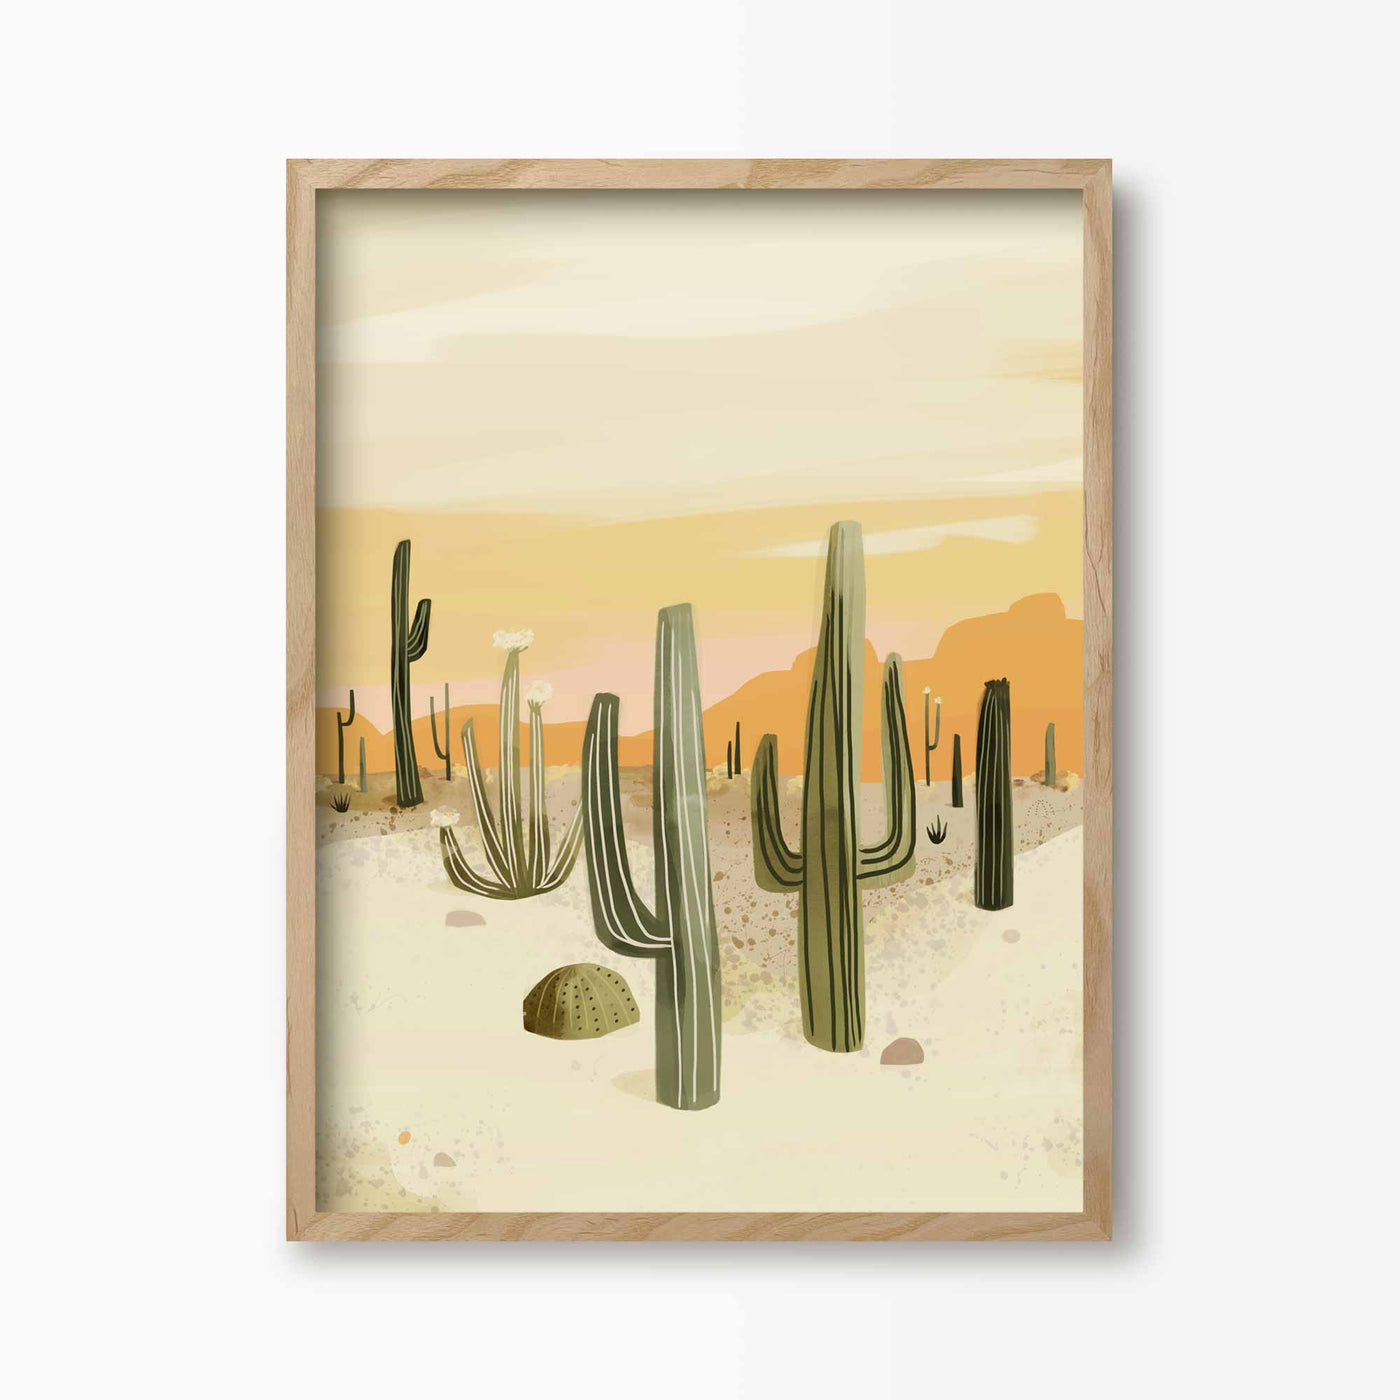 Green Lili 30x40cm (12x16") / Natural Frame Morocco Desert Cactus Art Print